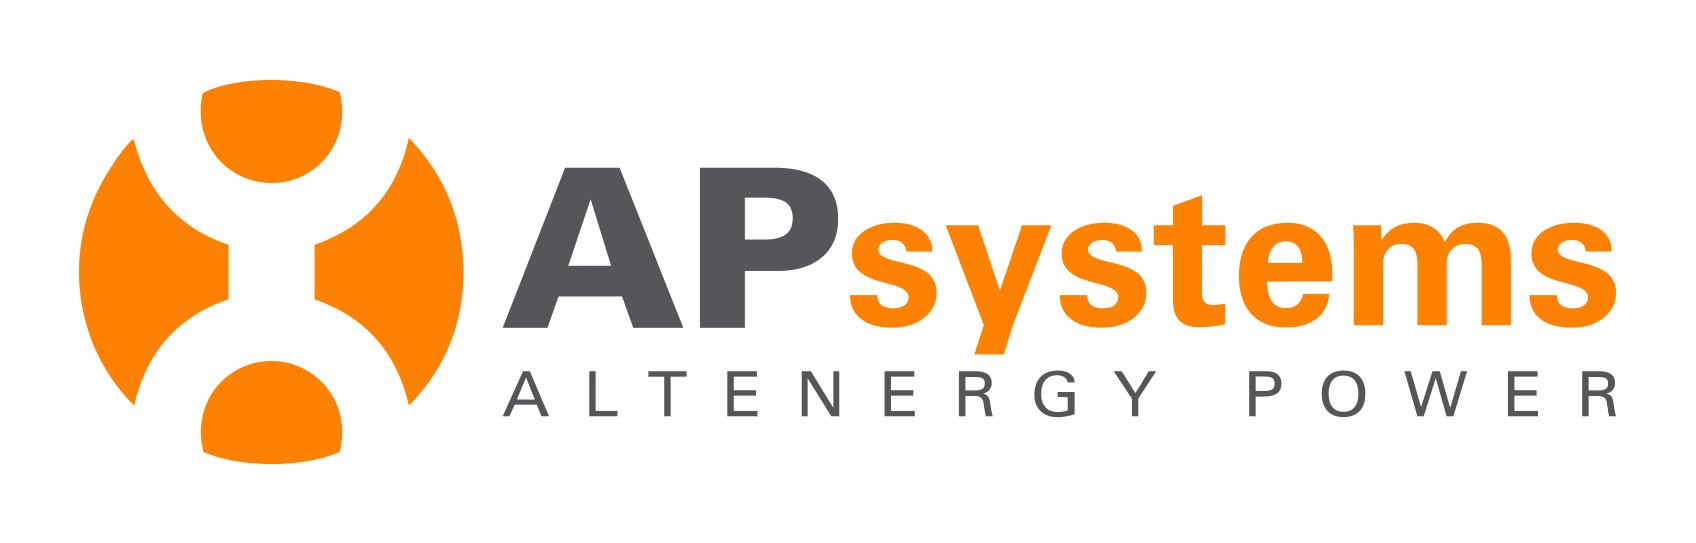 APSystems